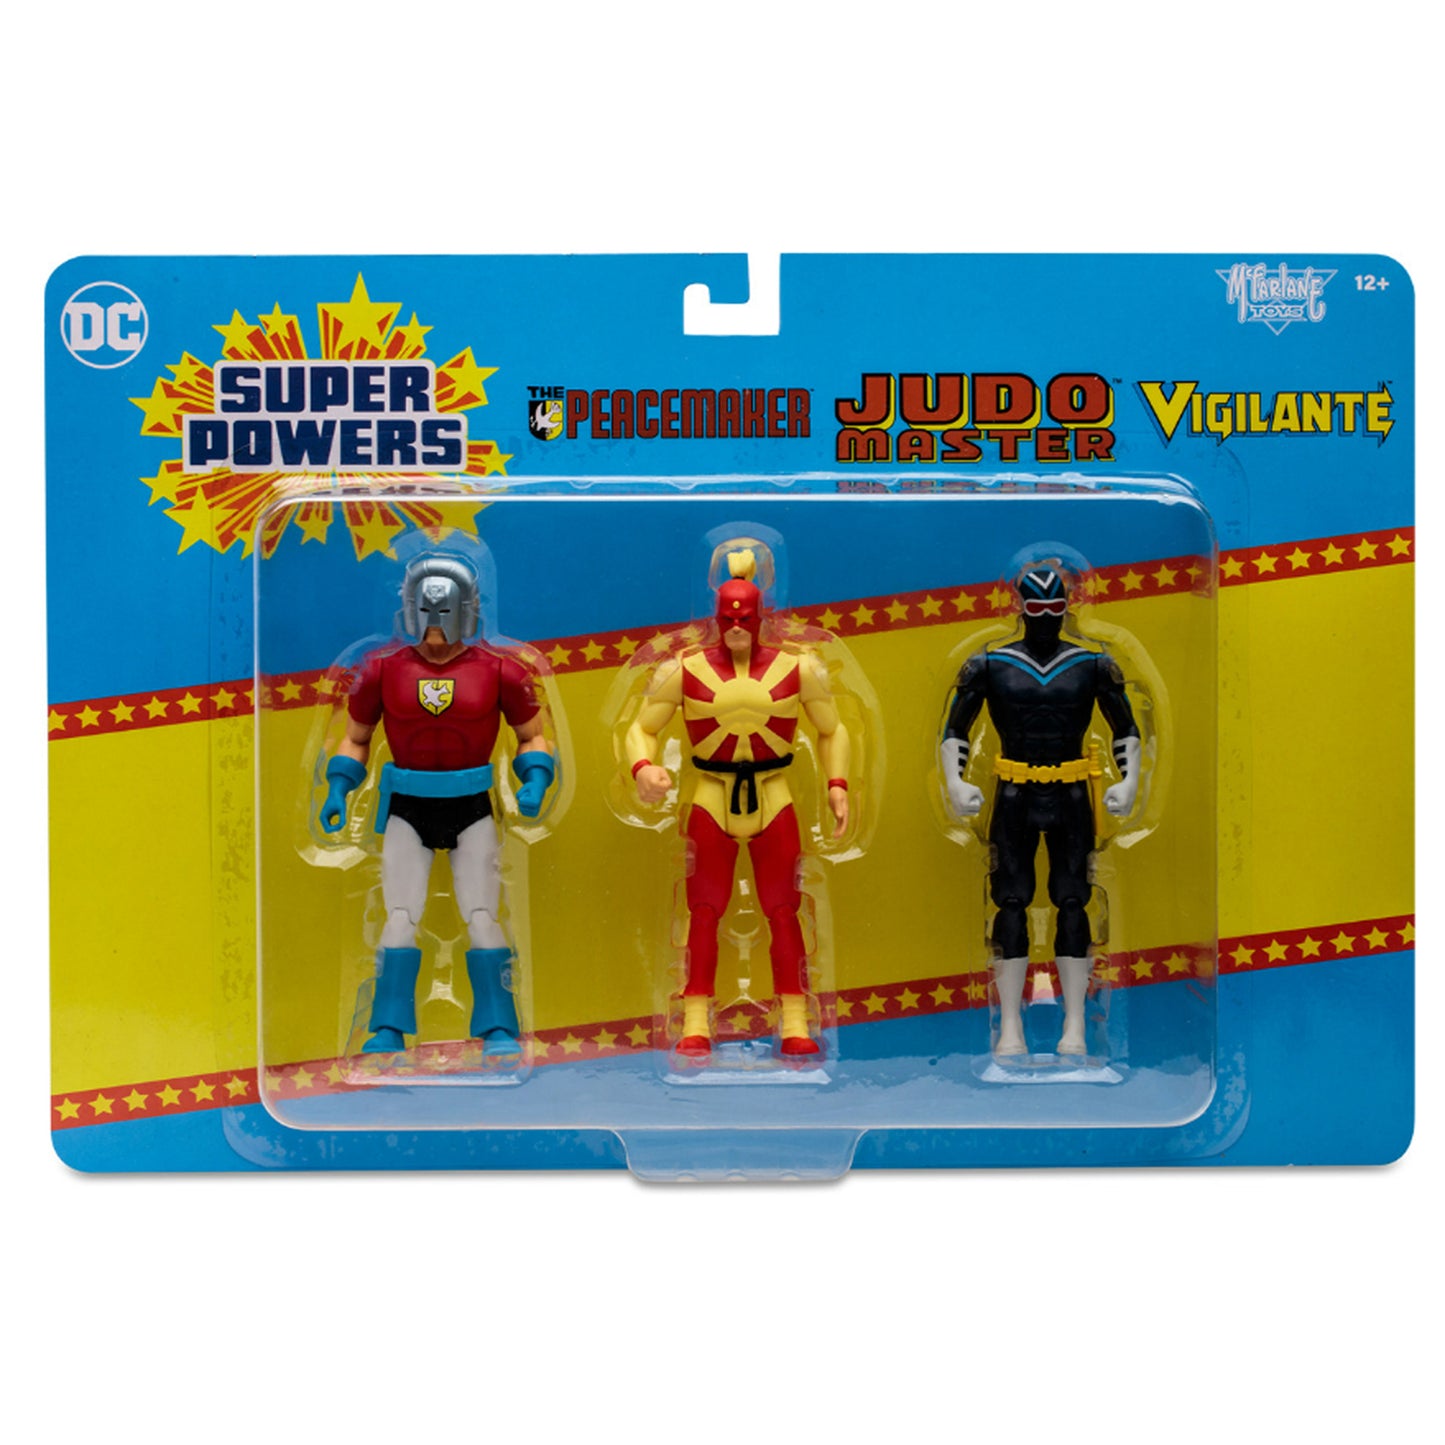 DC Super Powers Peacemaker/Judo Master/Vigilante